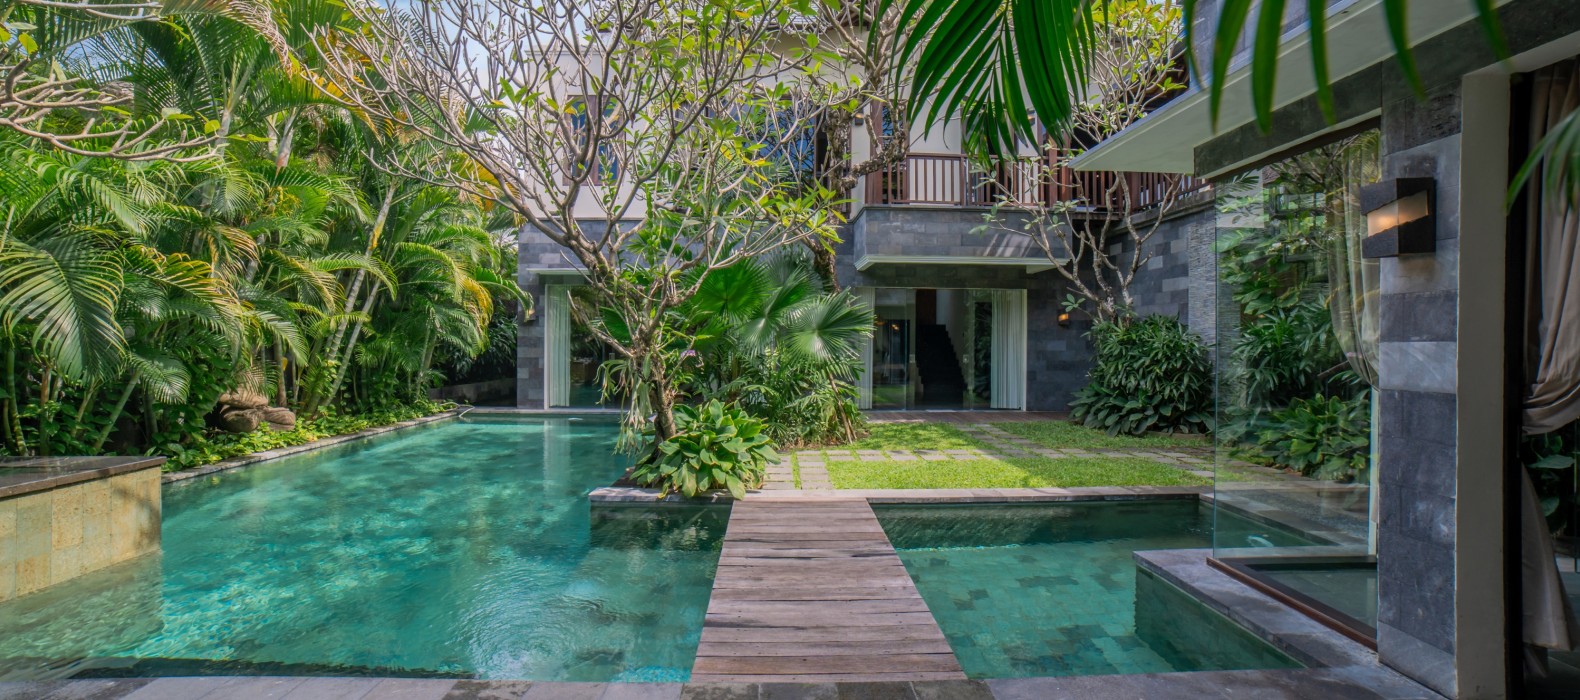 Exterior pool area of Villa Suvitha in Bali